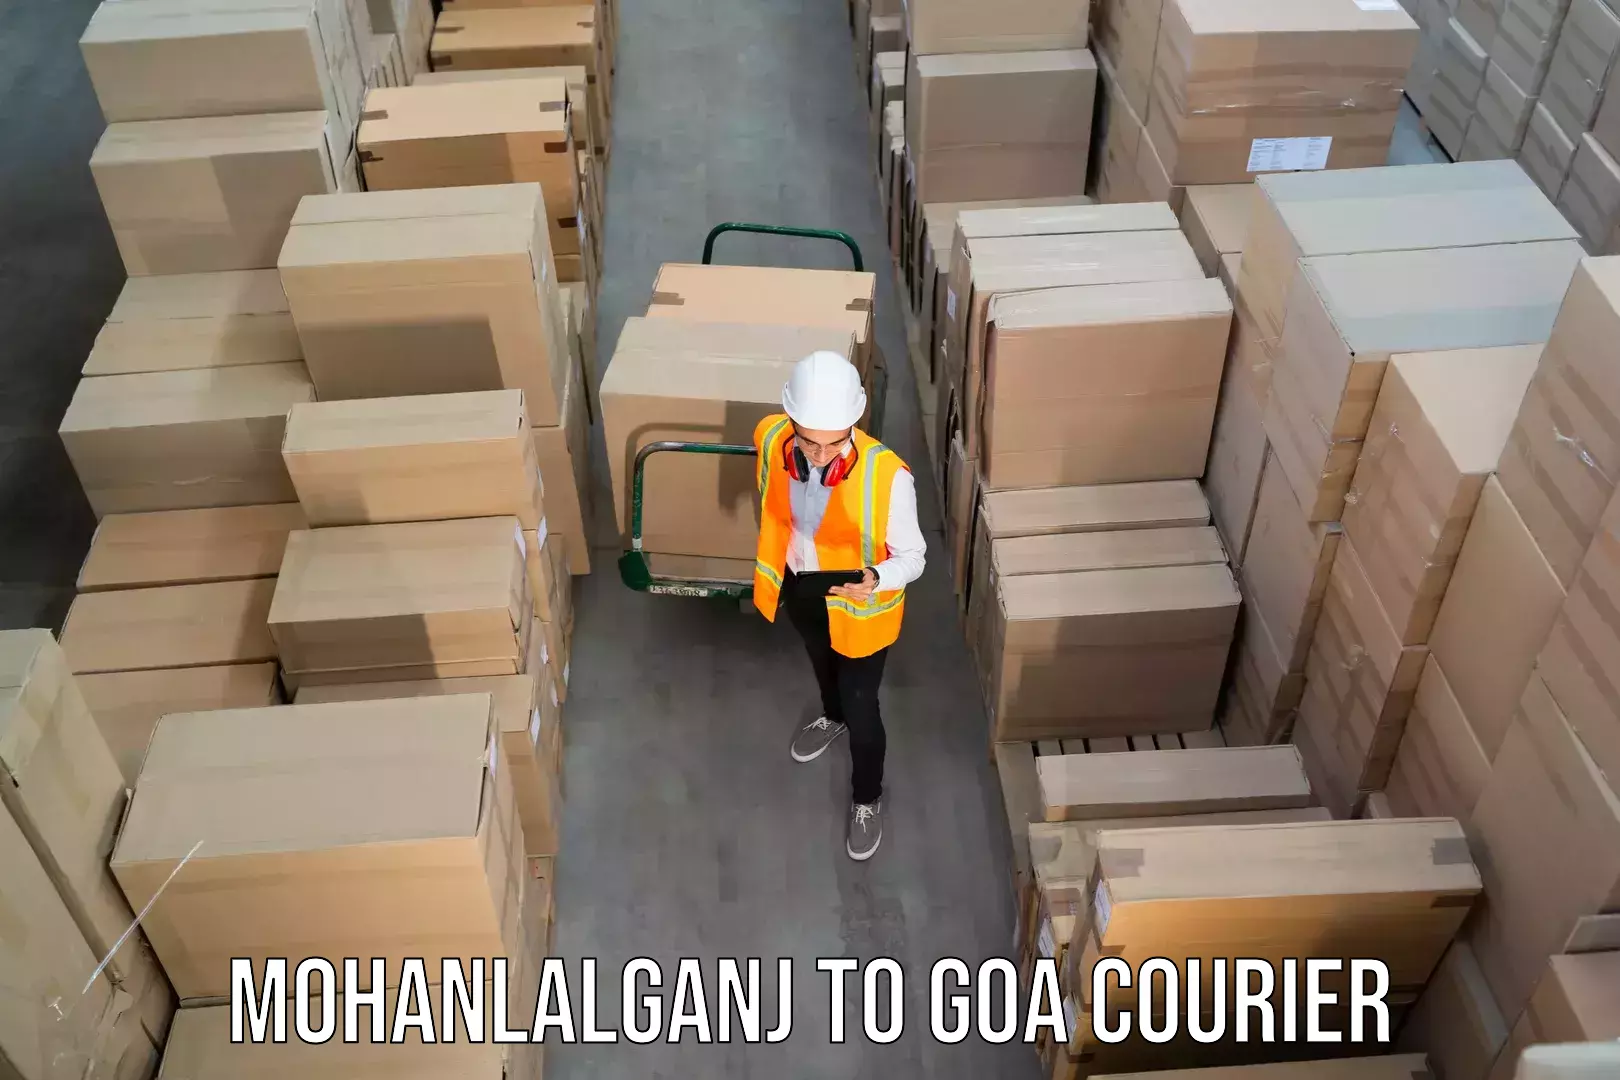 Courier service comparison Mohanlalganj to Margao